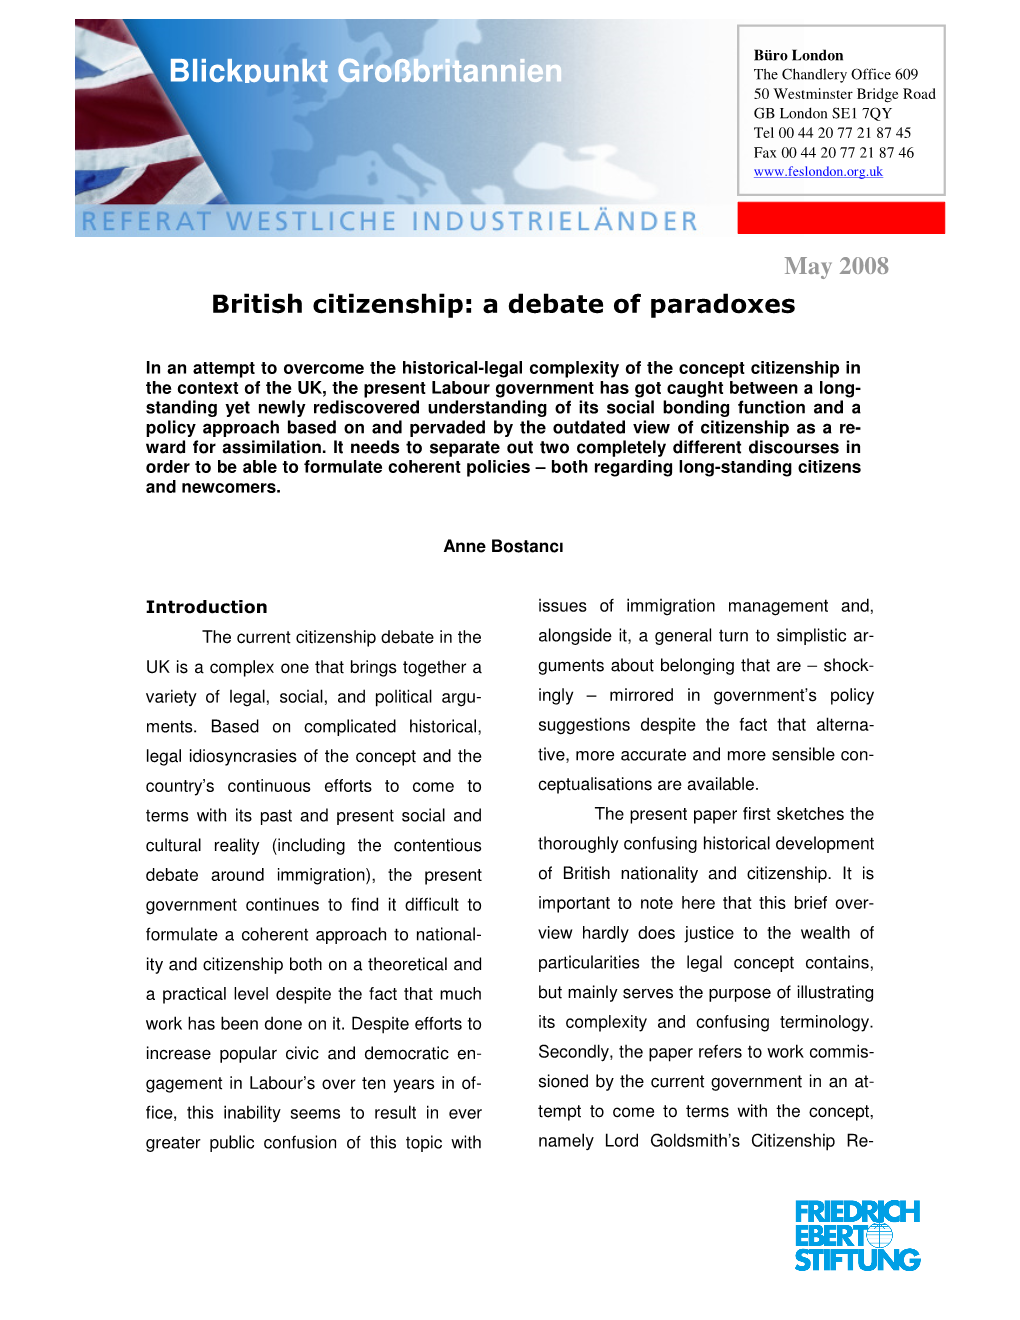 The British Citizenship Debate